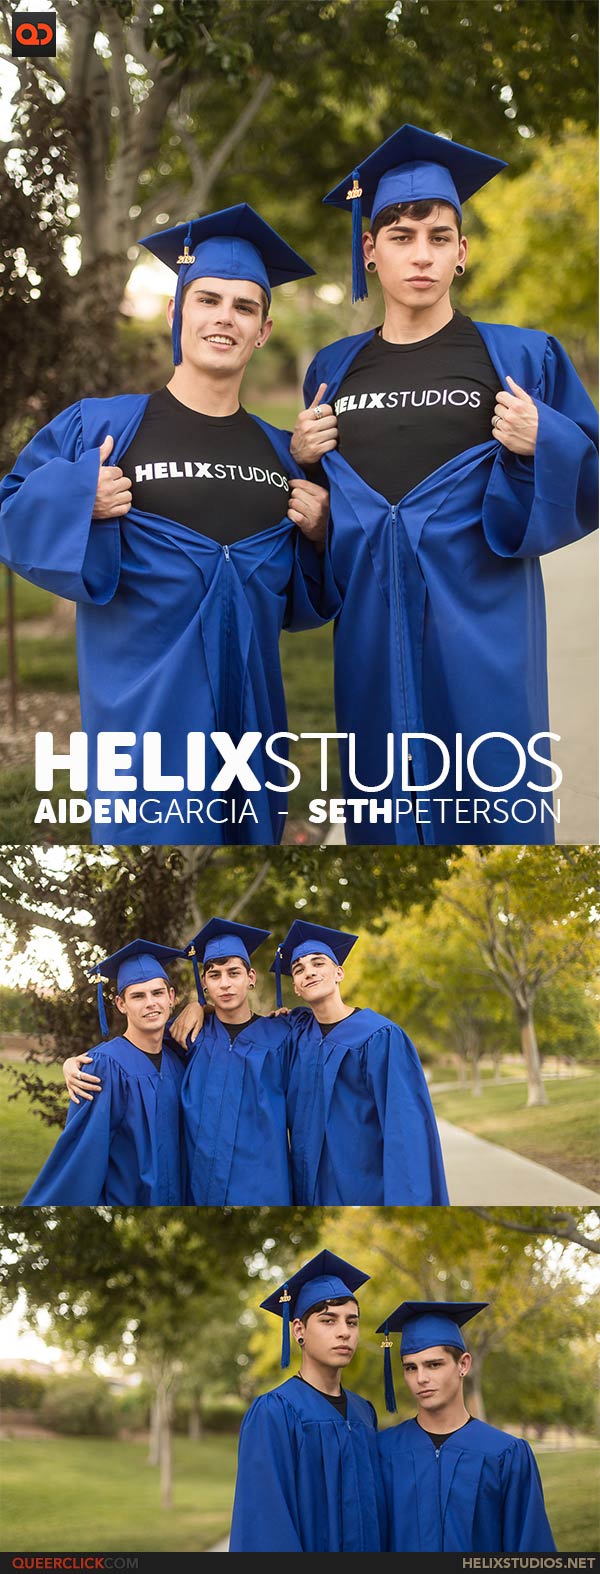 Helix Studios: Aiden Garcia and Seth Peterson